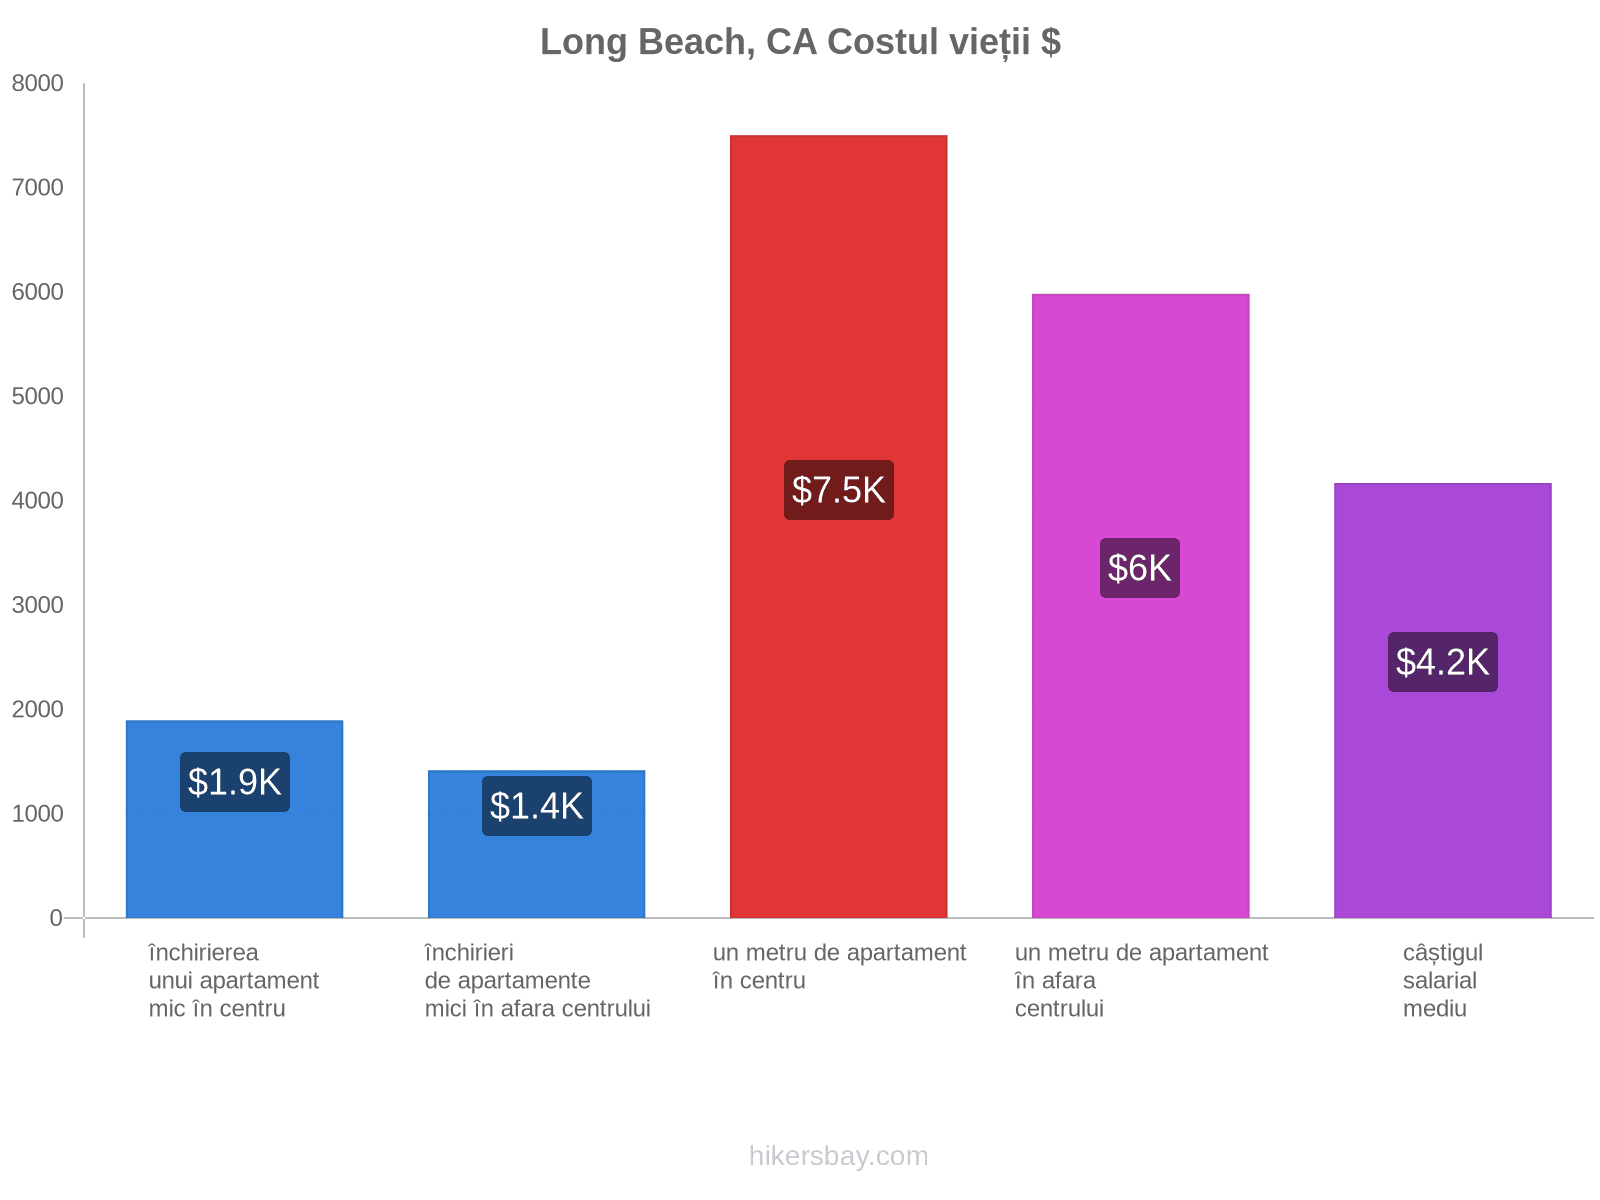 Long Beach, CA costul vieții hikersbay.com